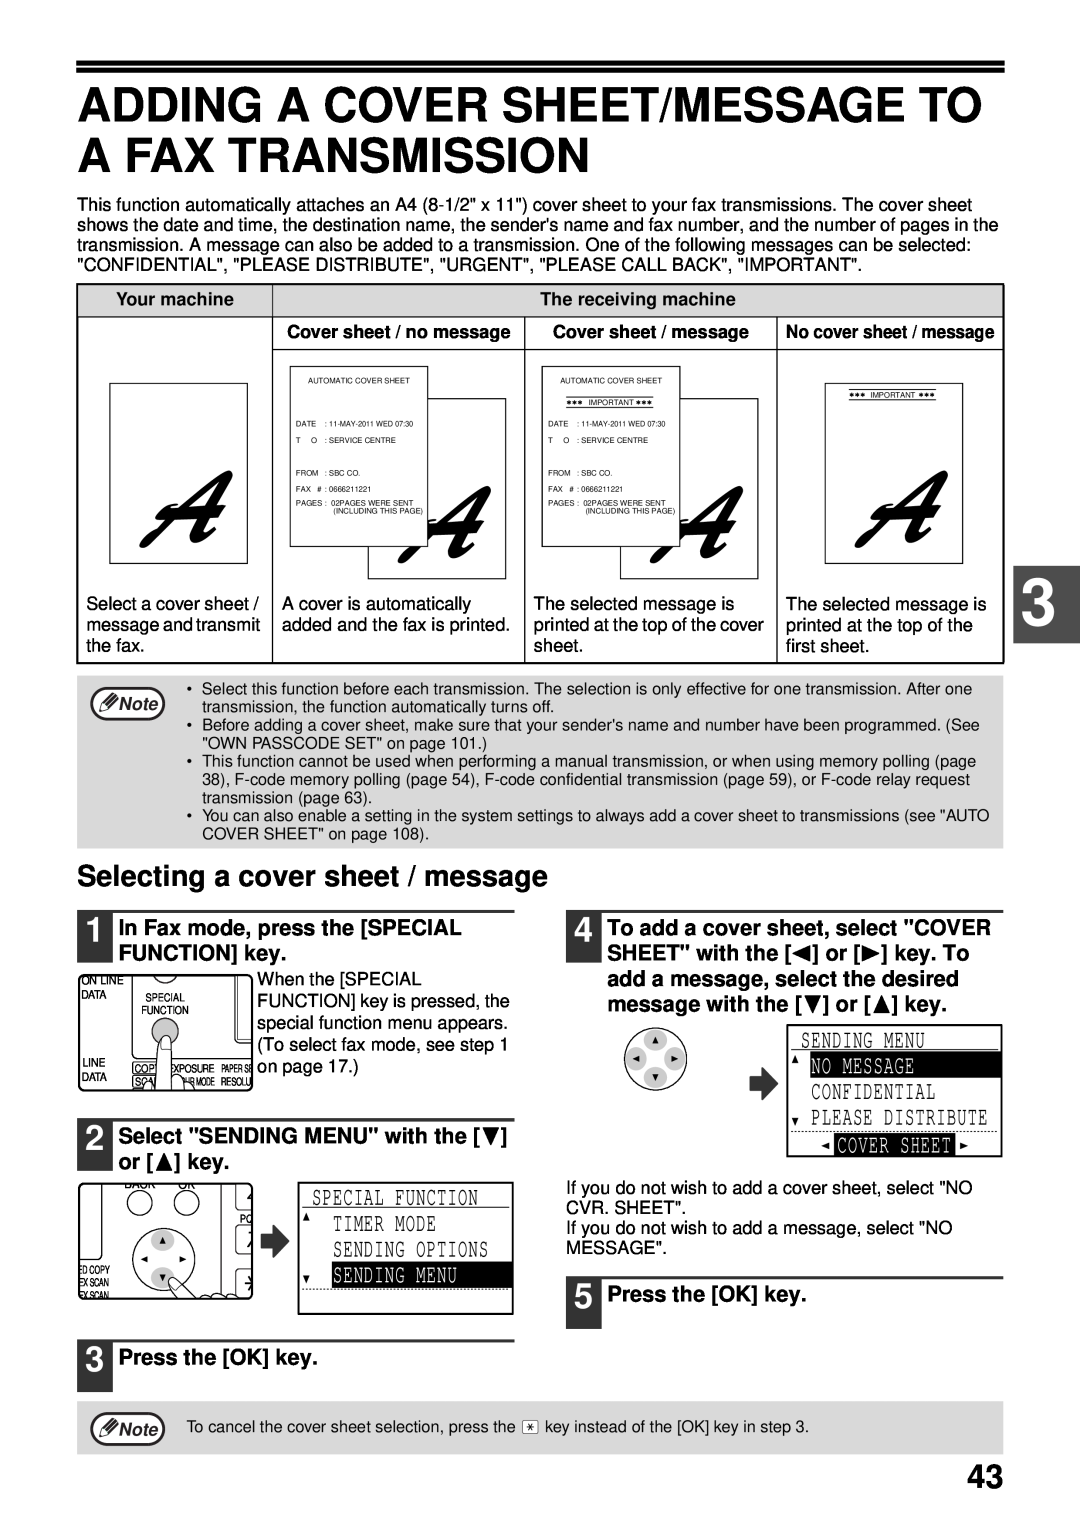 Sharp MX-FX13 Adding A Cover Sheet/Message To A Fax Transmission, Selecting a cover sheet / message, Menu, No Message 